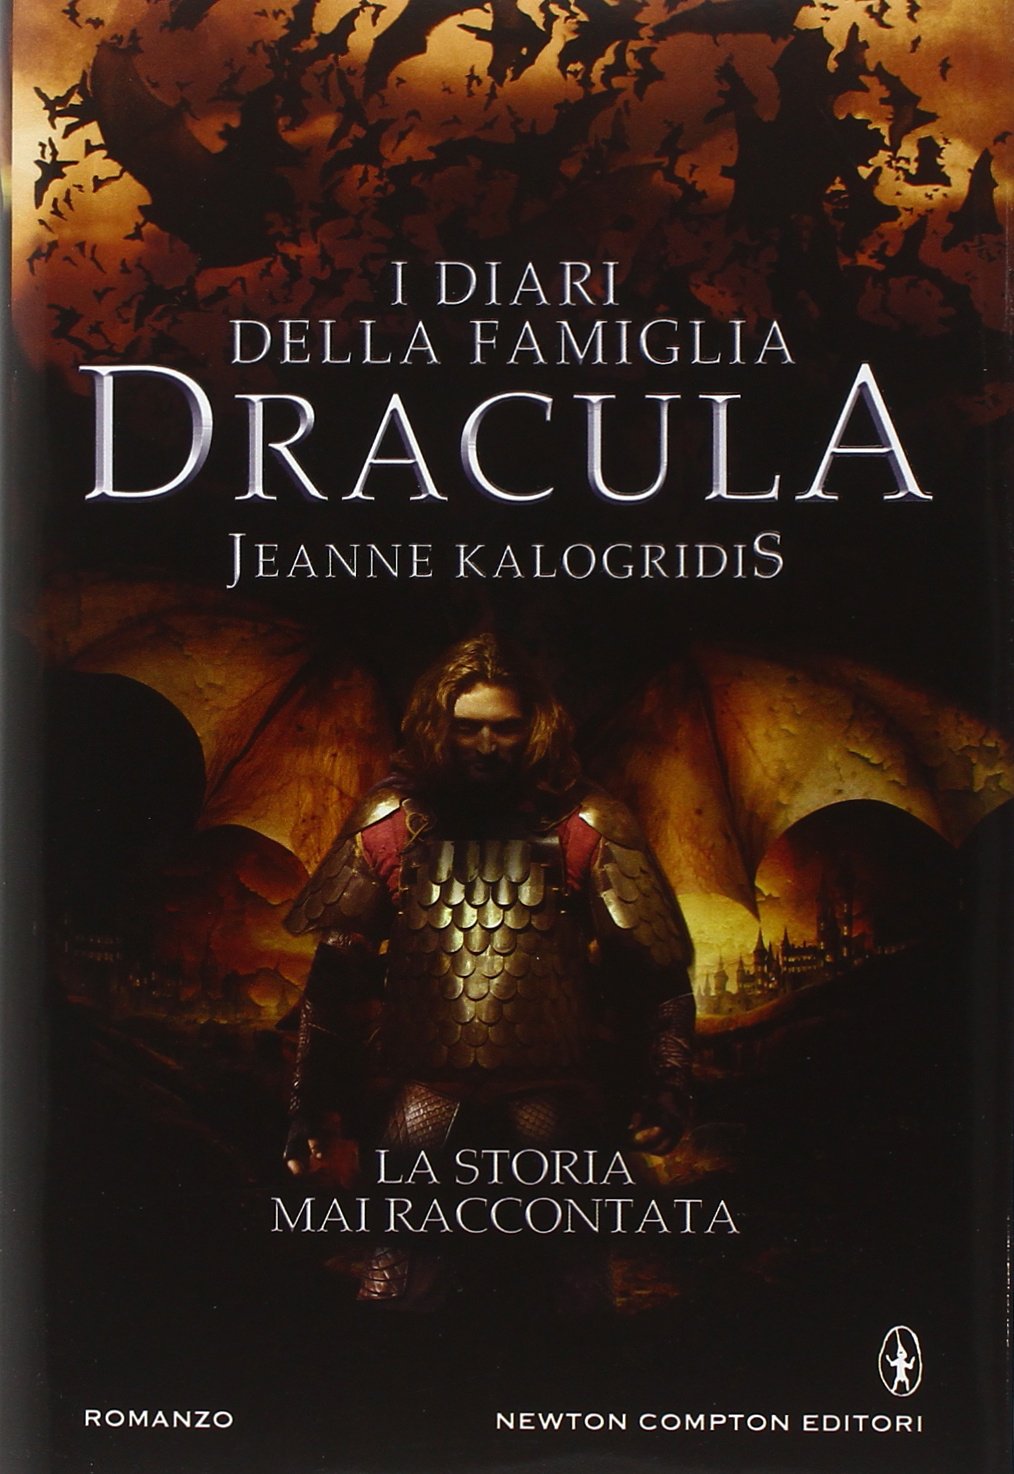 I diari della famiglia Dracula Jeanne Kalogridis Newton Compton fantasy horror